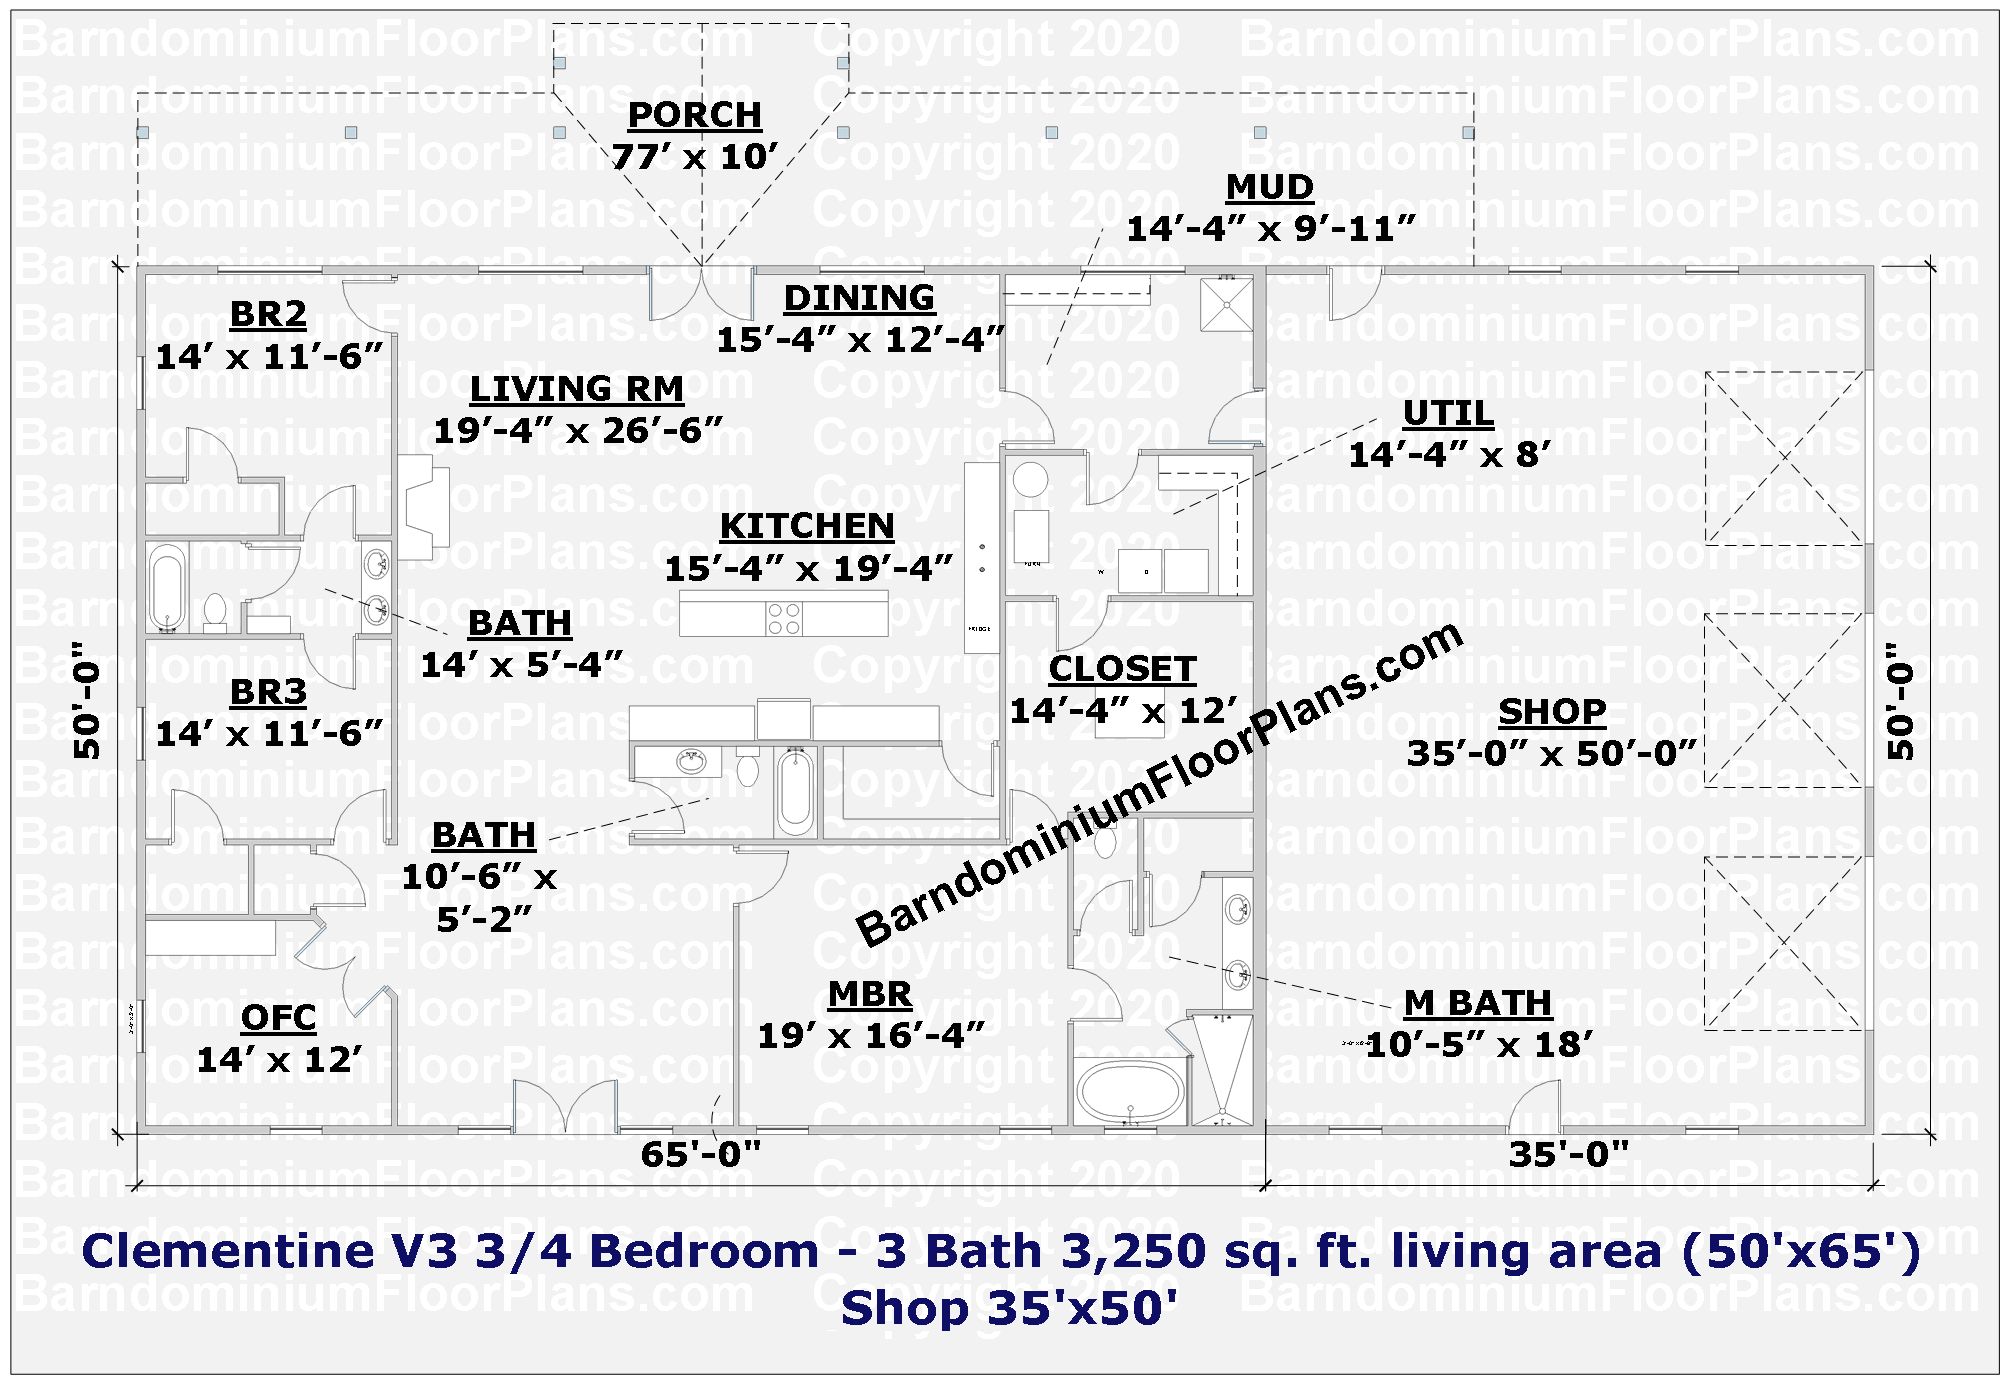 Clementine V3 3 or 4 Bedroom 3 Bath 3,250 sq. ft. Barndominium Floor Plan